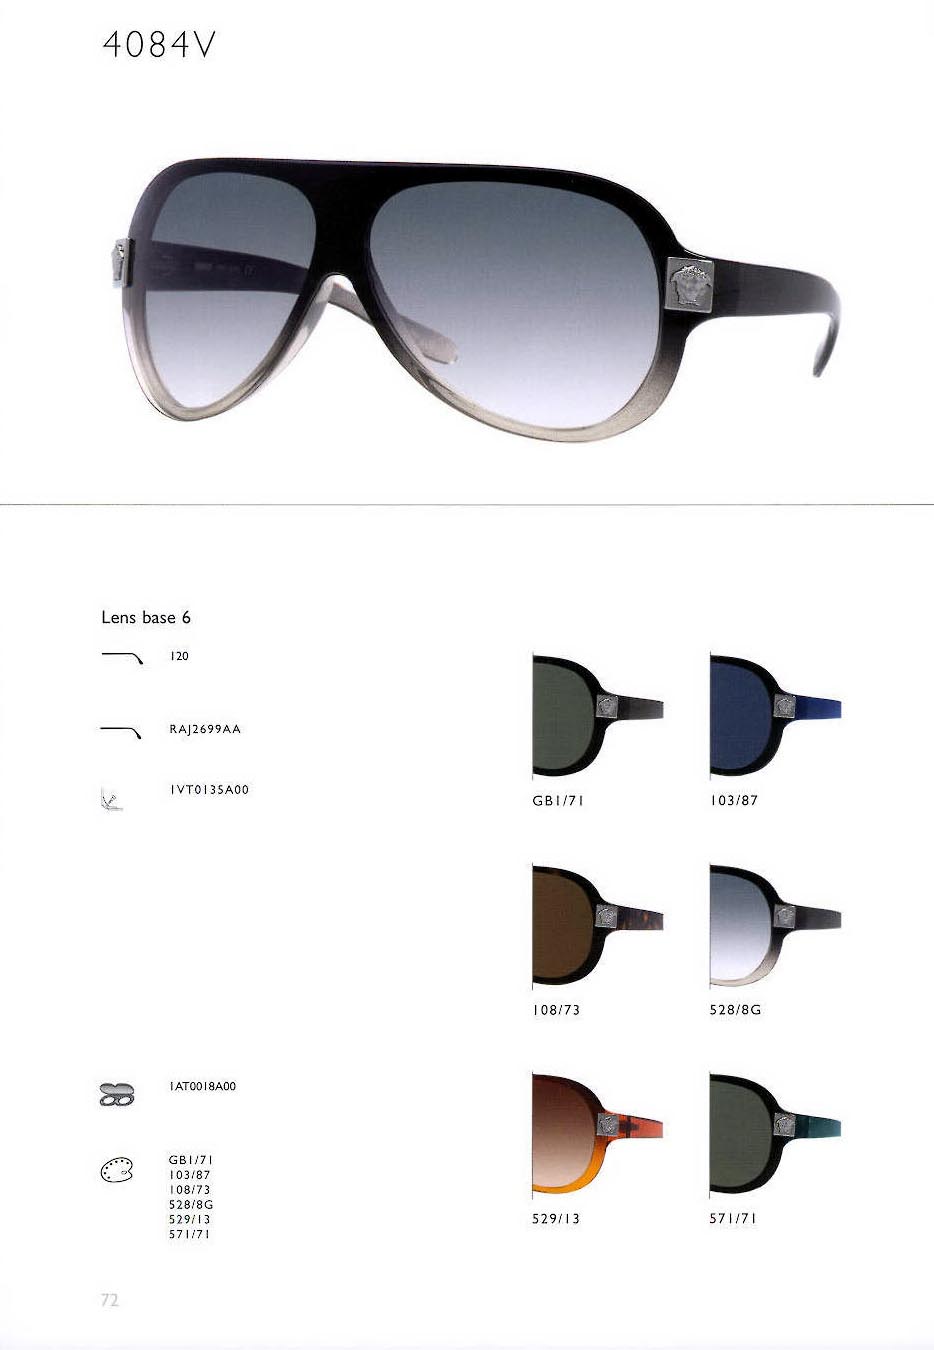 Sunglasses Versace 4084V GB1/71